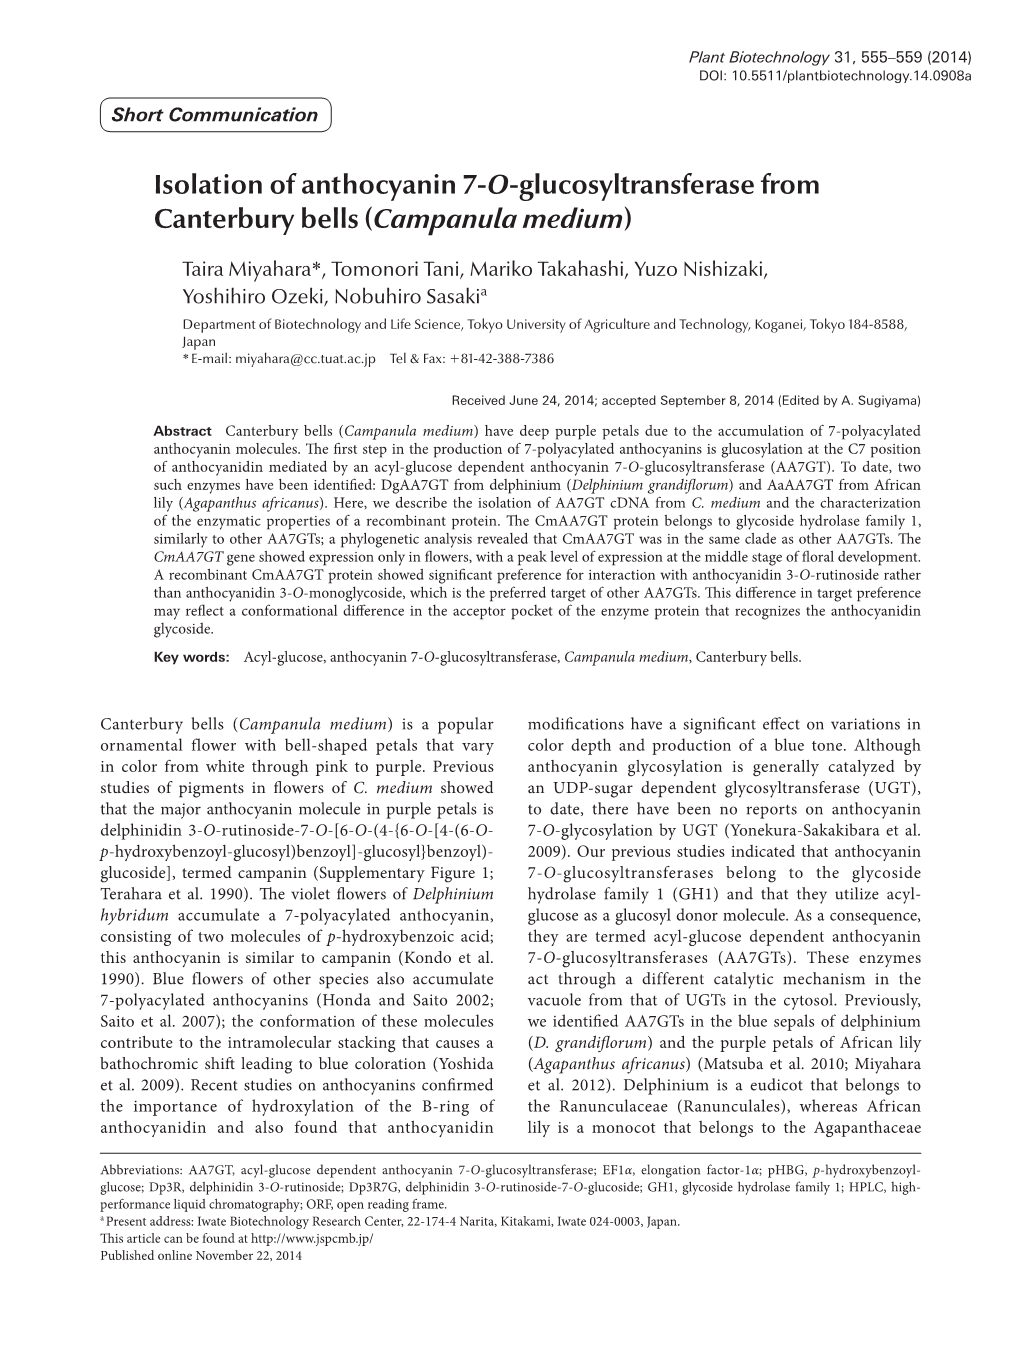 Isolation of Anthocyanin 7-O-Glucosyltransferase from Canterbury Bells (Campanula Medium)